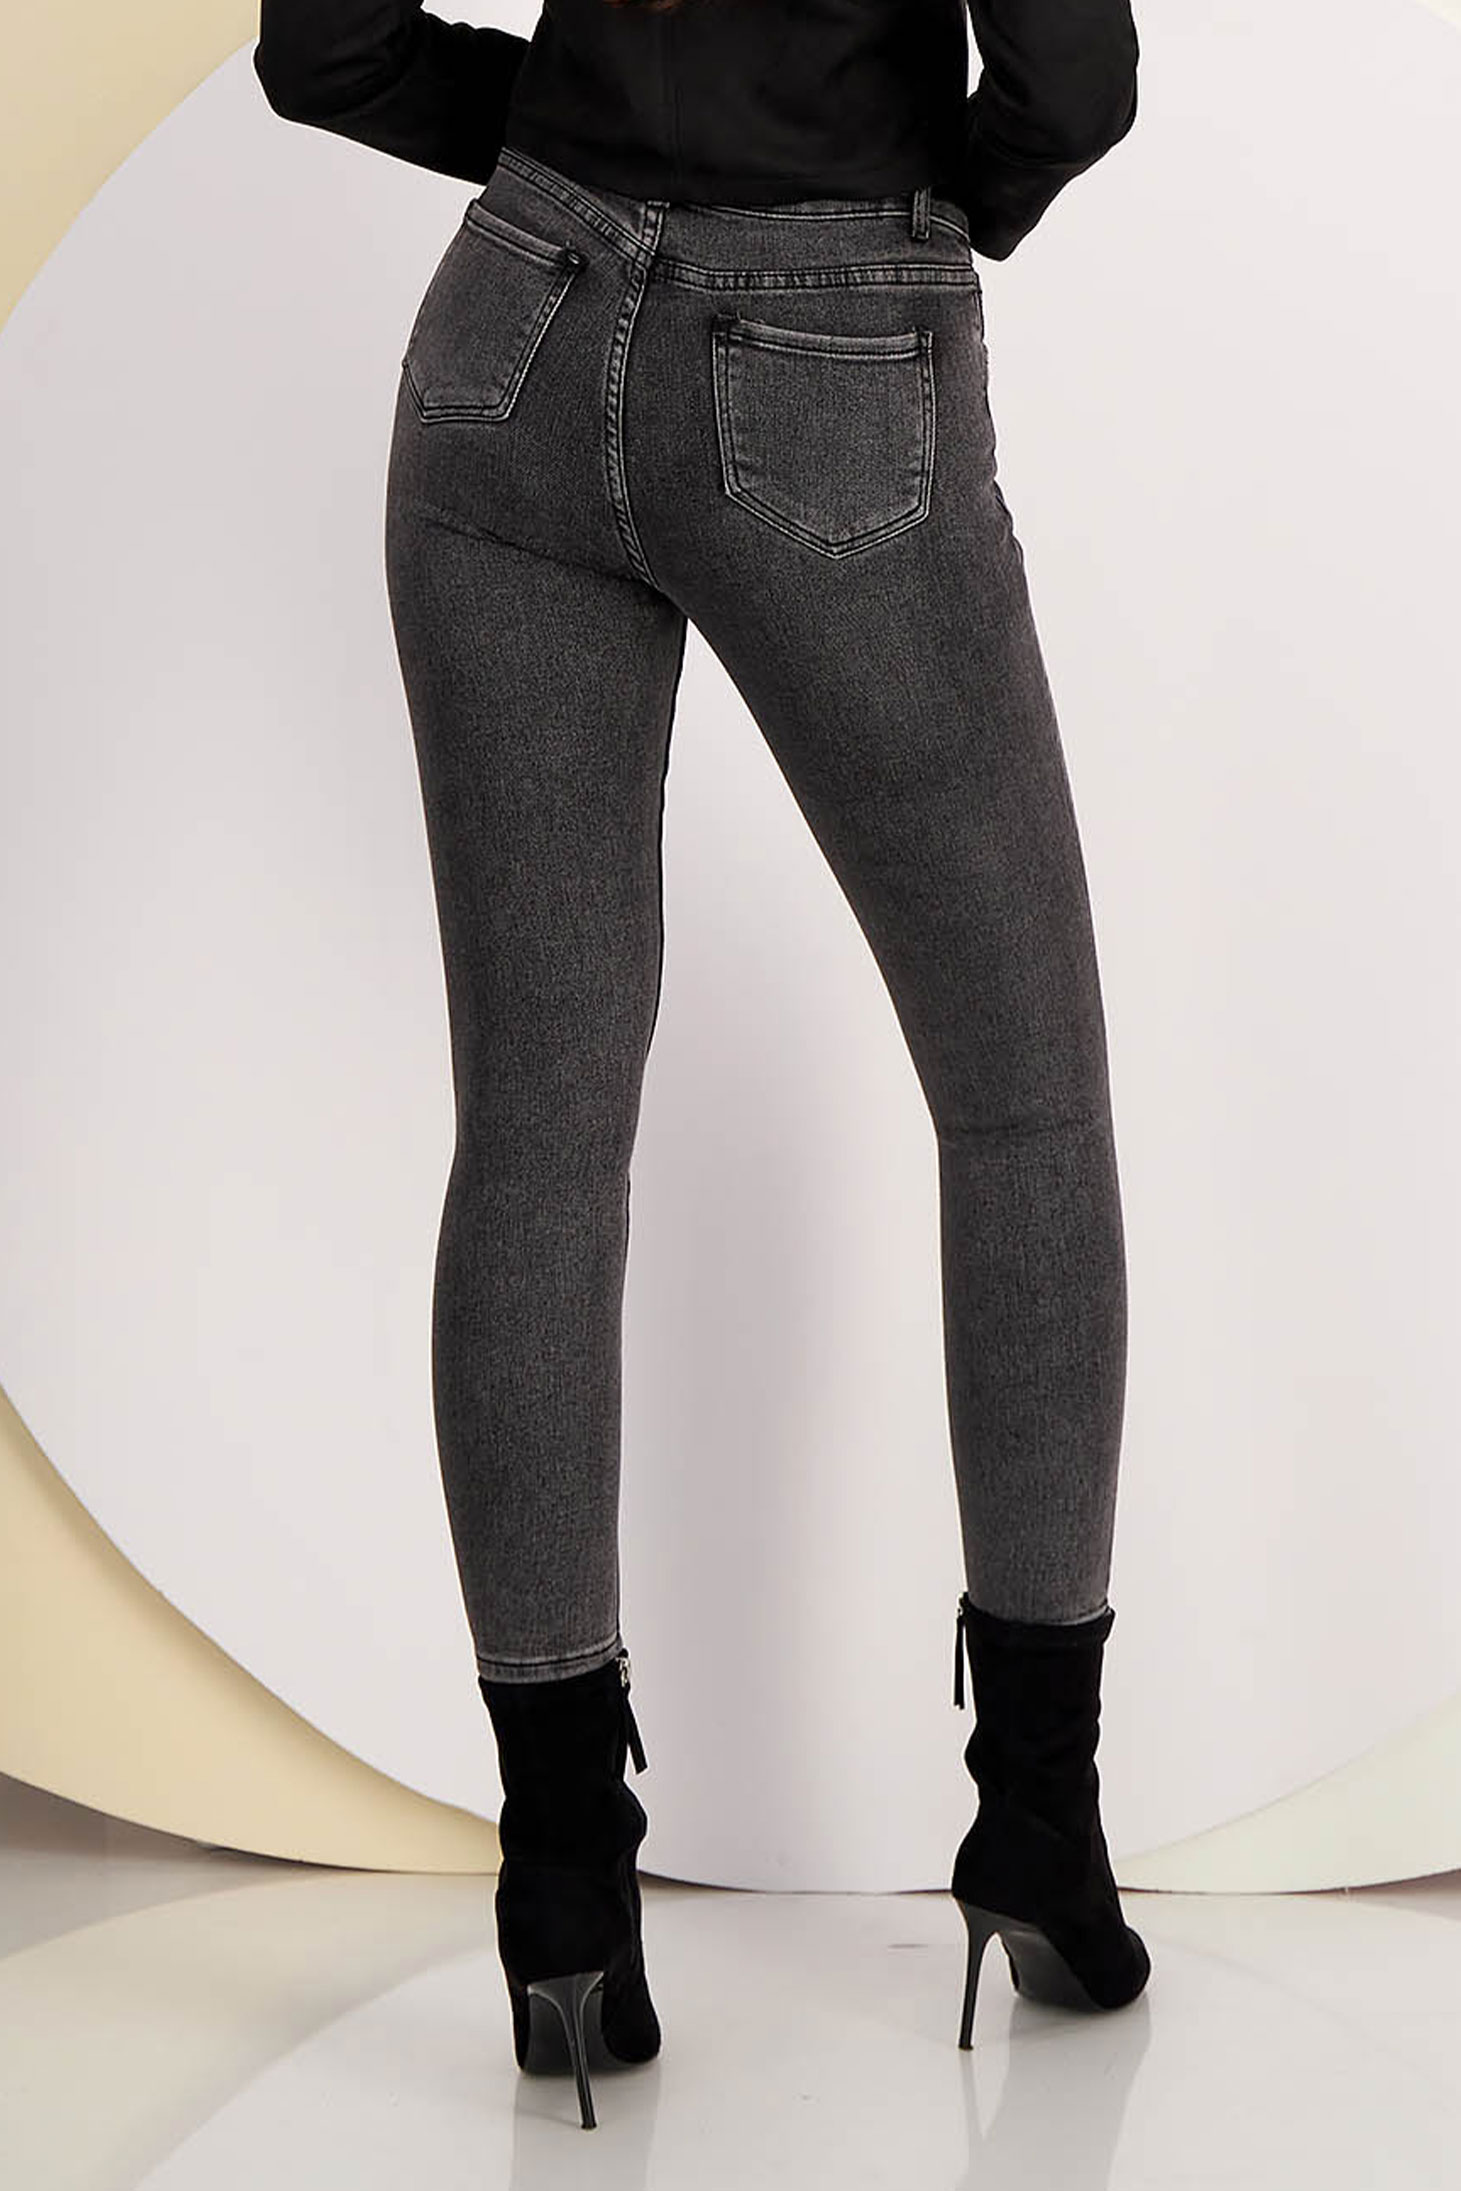 Black skinny jeans with pockets - SunShine 5 - StarShinerS.com